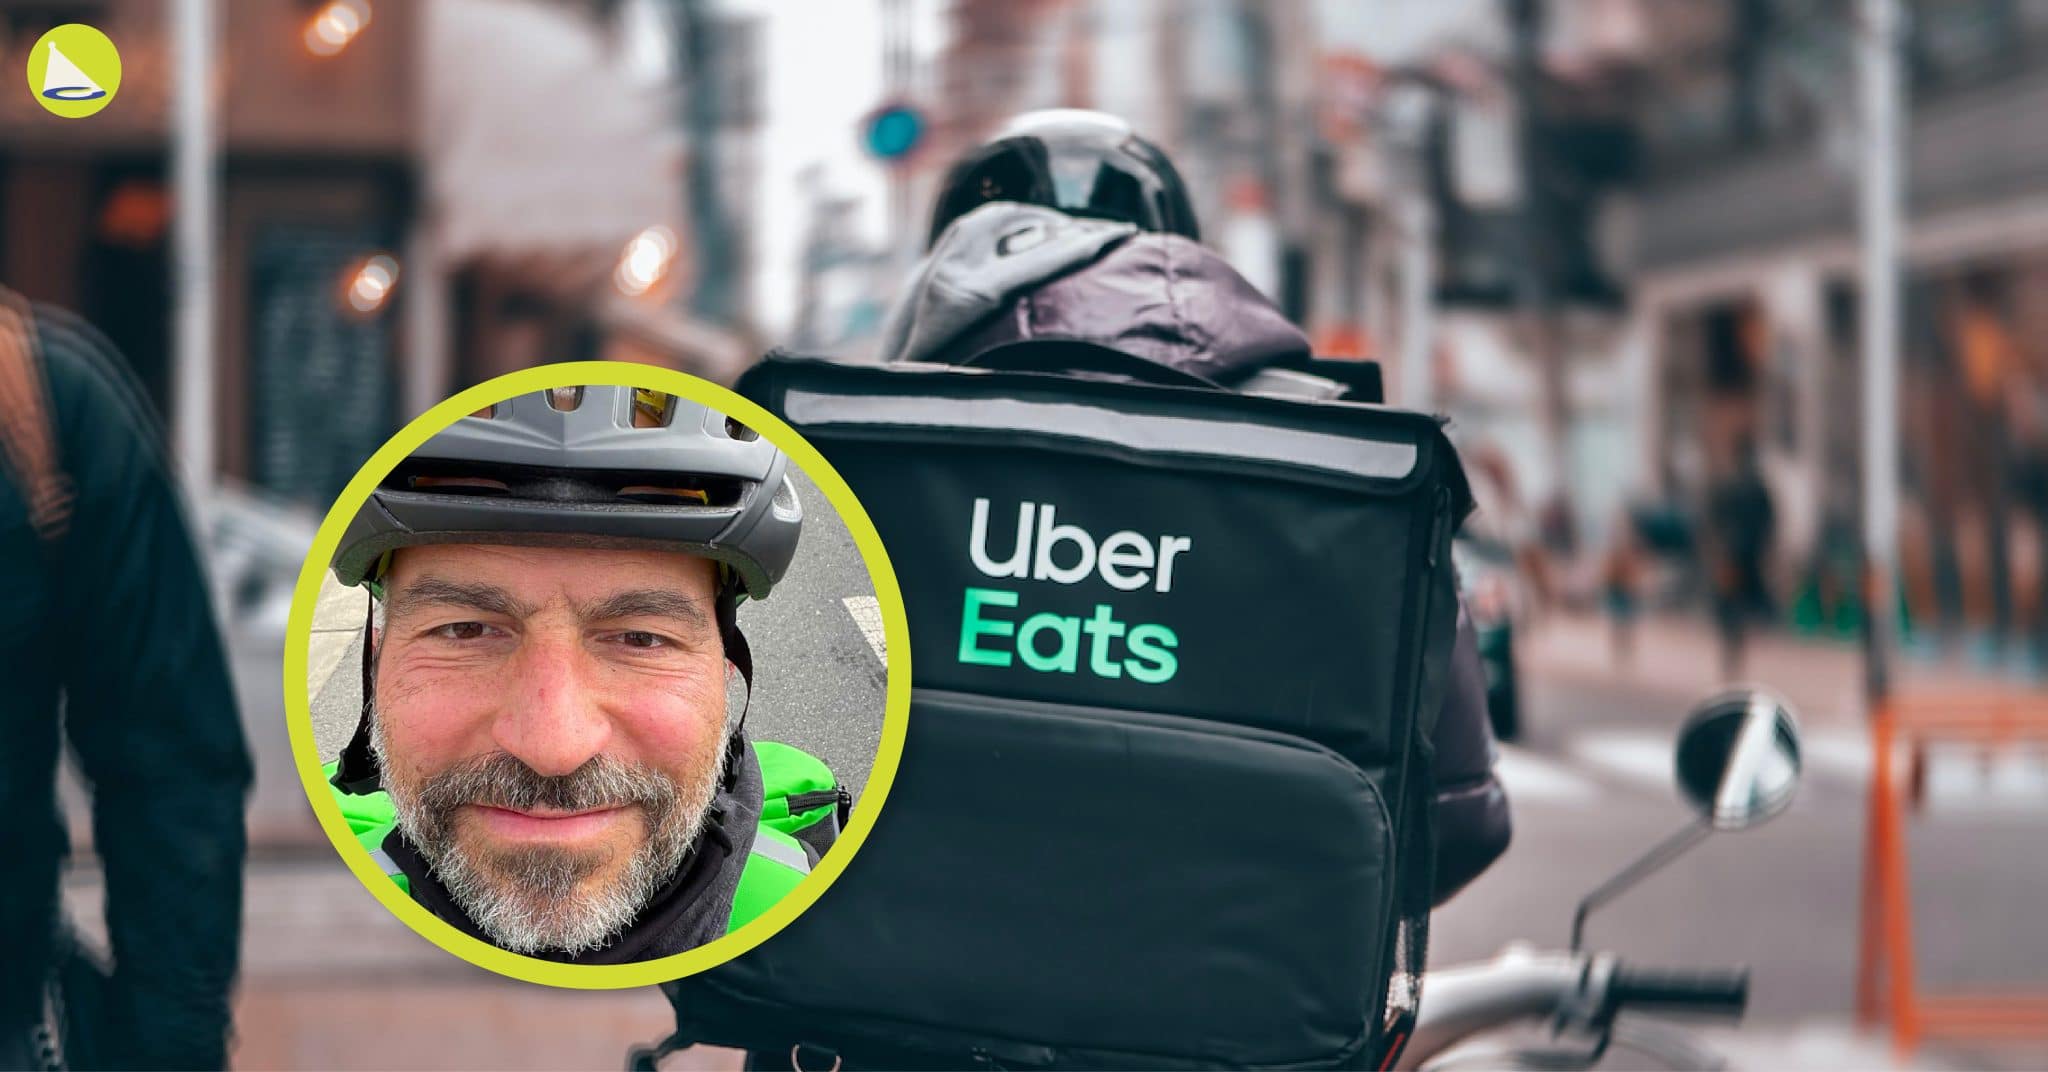 Dara Khosrowshahi: CEO Uber ลองขับมอไซส่งอาหาร 3 ชม. ได้ 3500 บาท